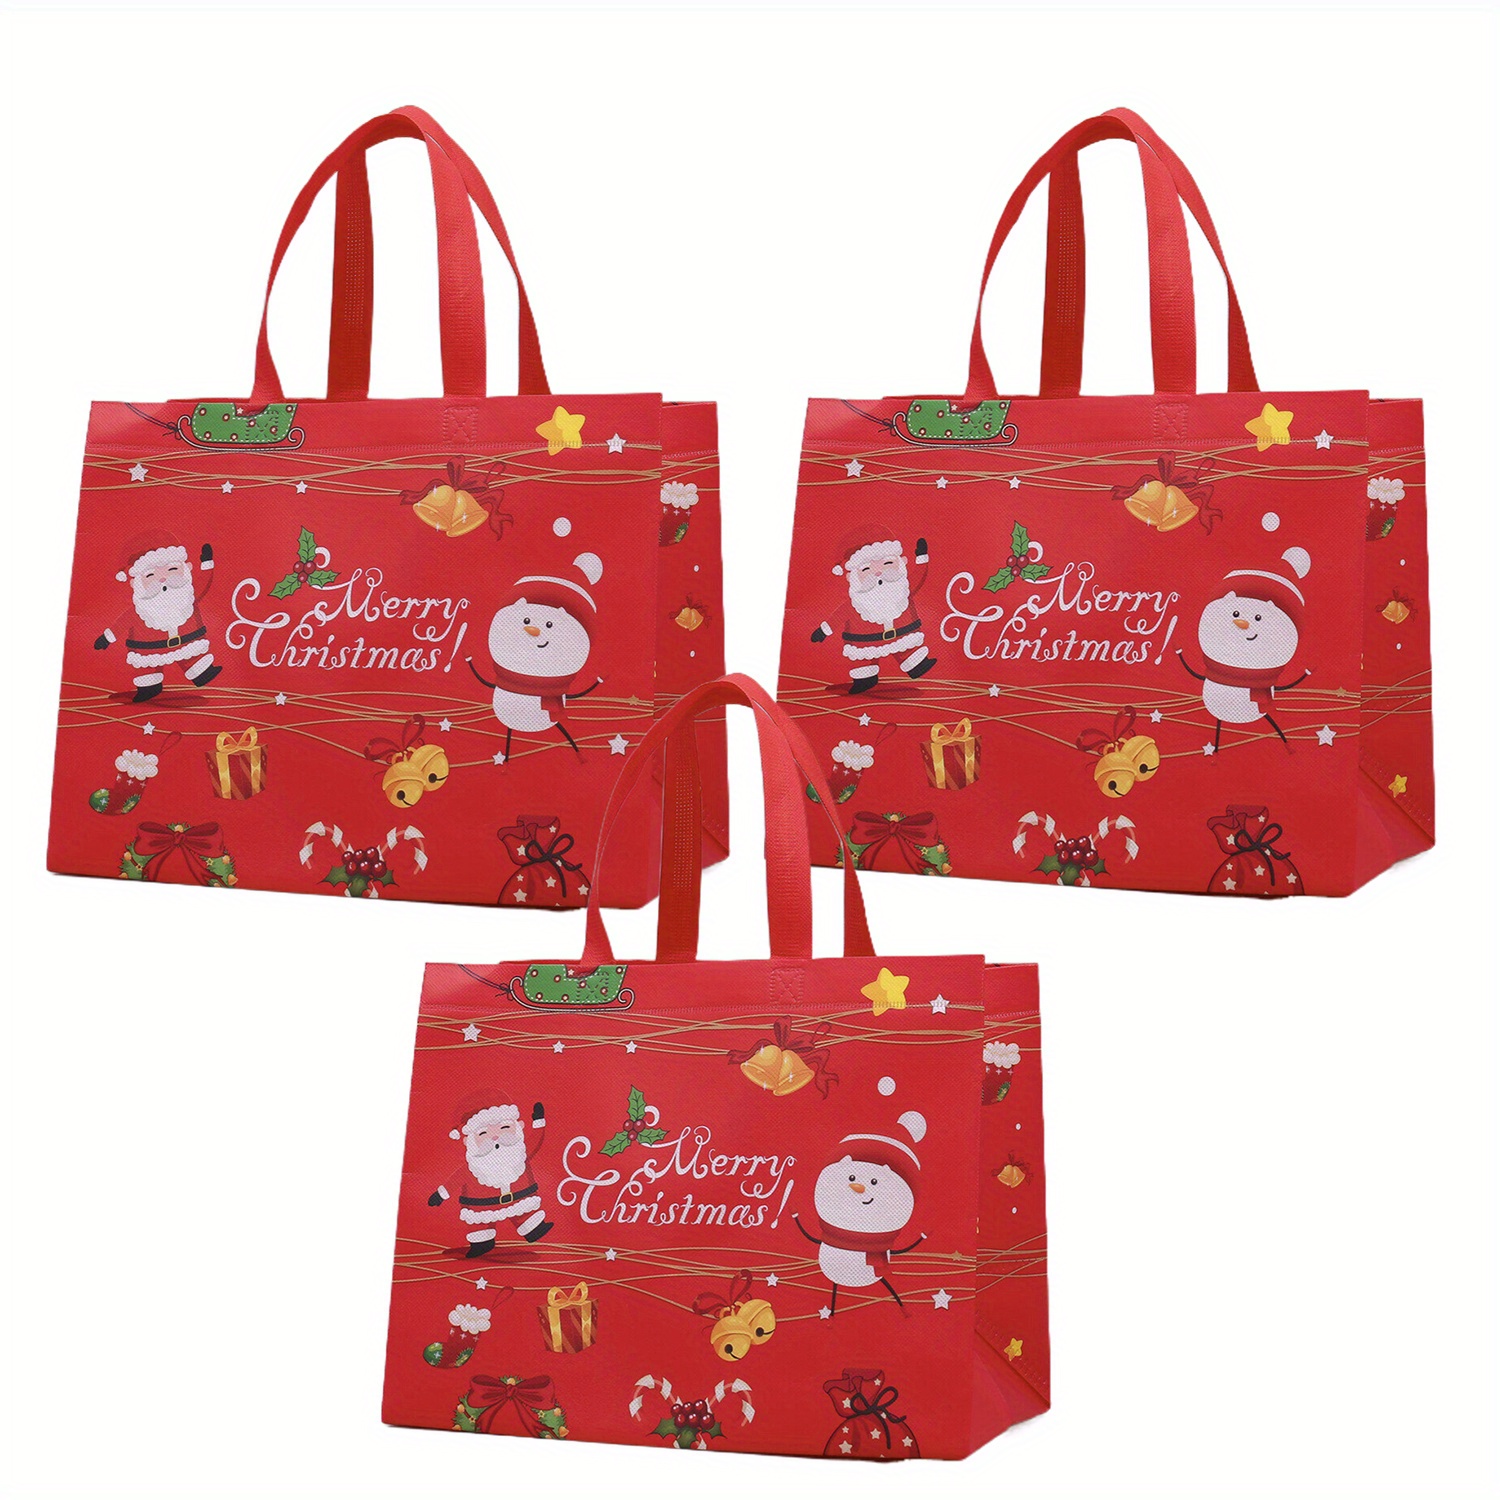 3 Bolsas Regalo Navidad Modelo Reyes Magos - Medidas 30 x 10 x 42 cm -  Bolsas de Navidad con motivos navideños para regalos, Bolsas con Asas,  Regalos